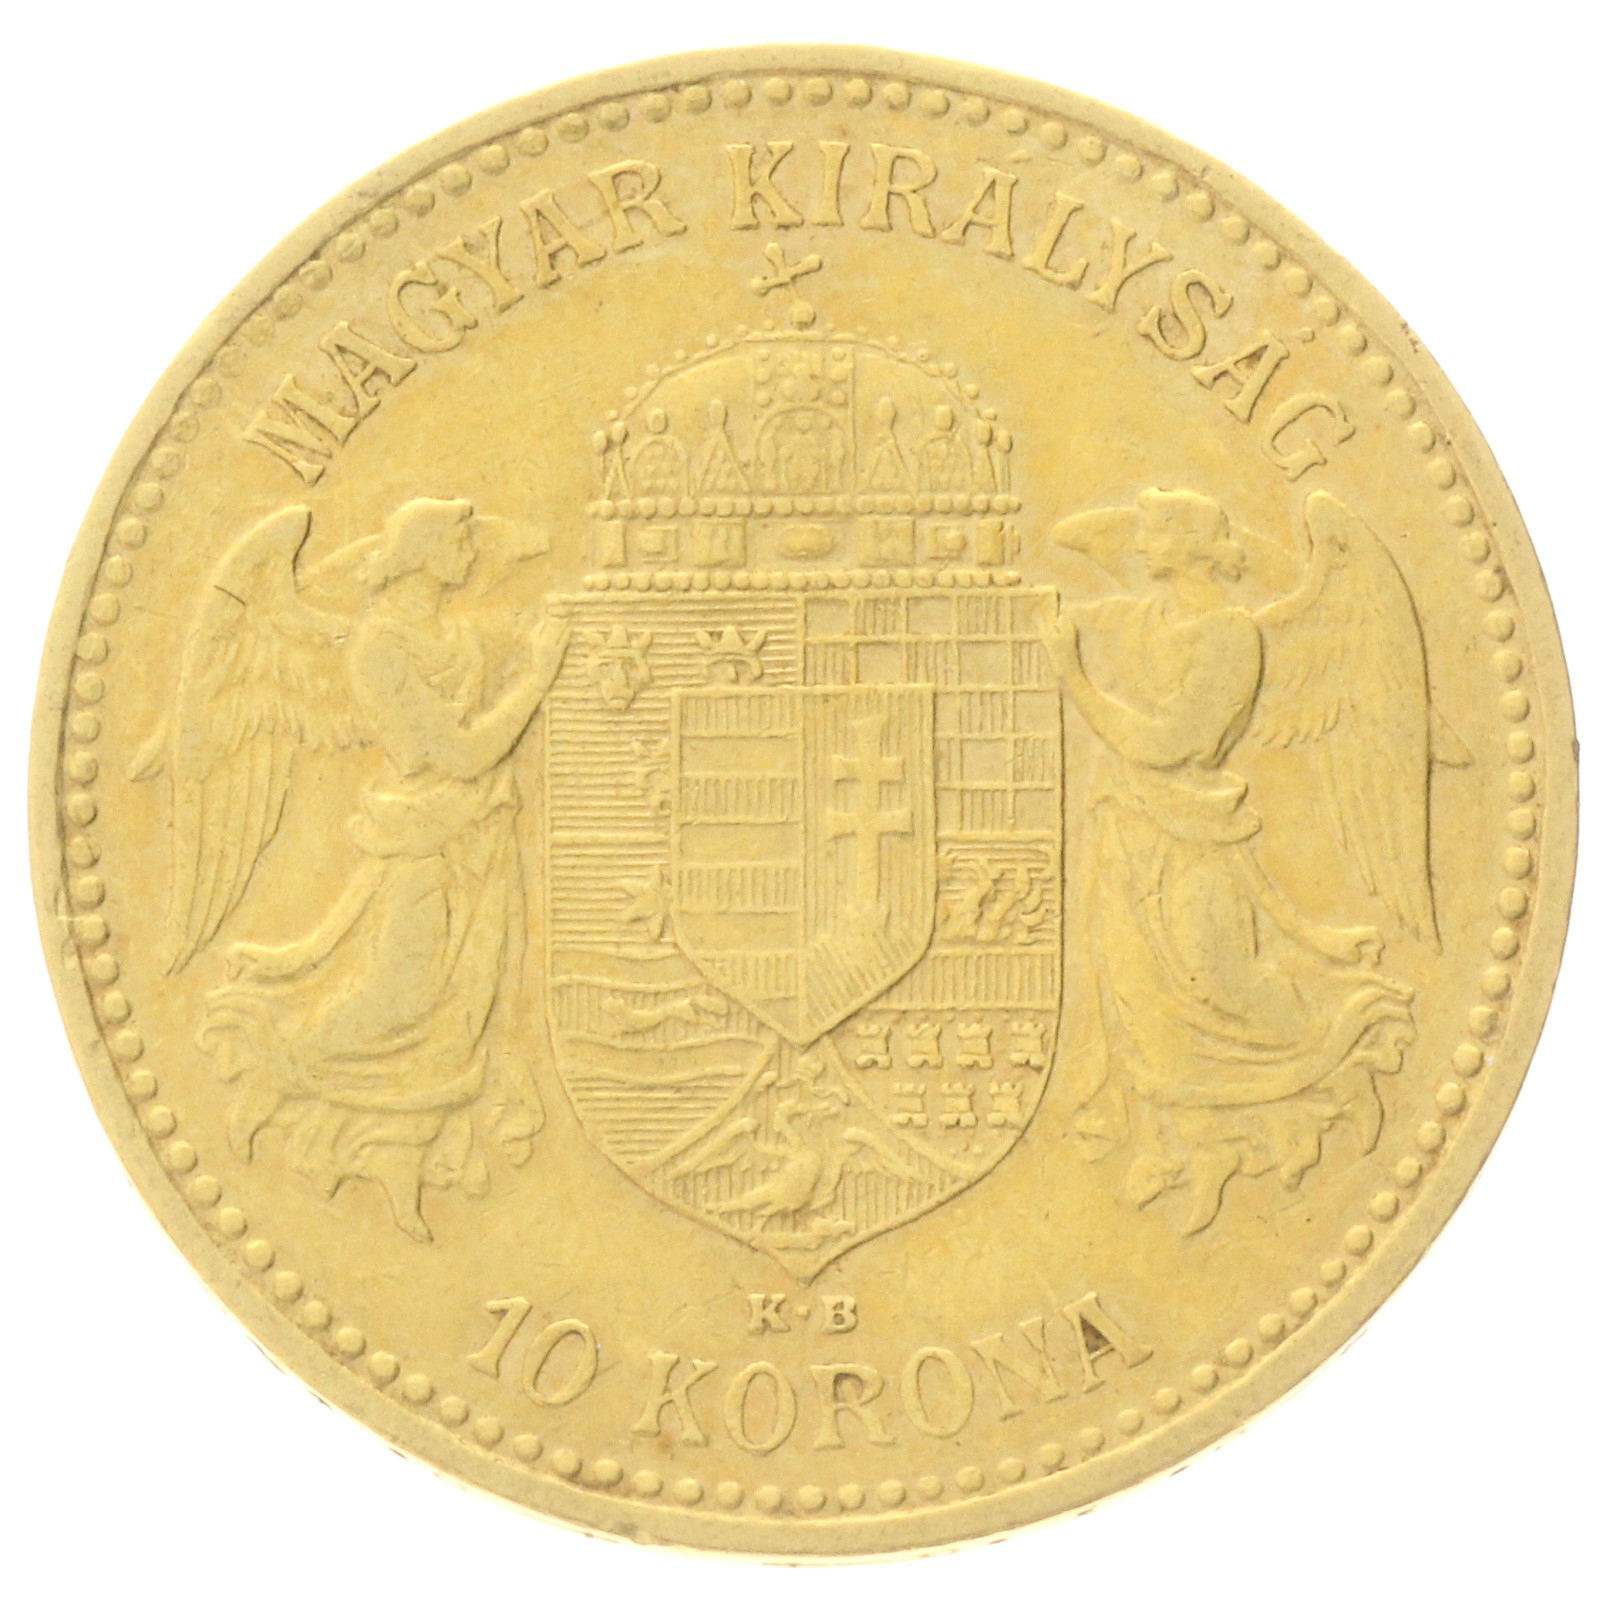 Hungary - 10 korona - 1904 - Franz Joseph I 